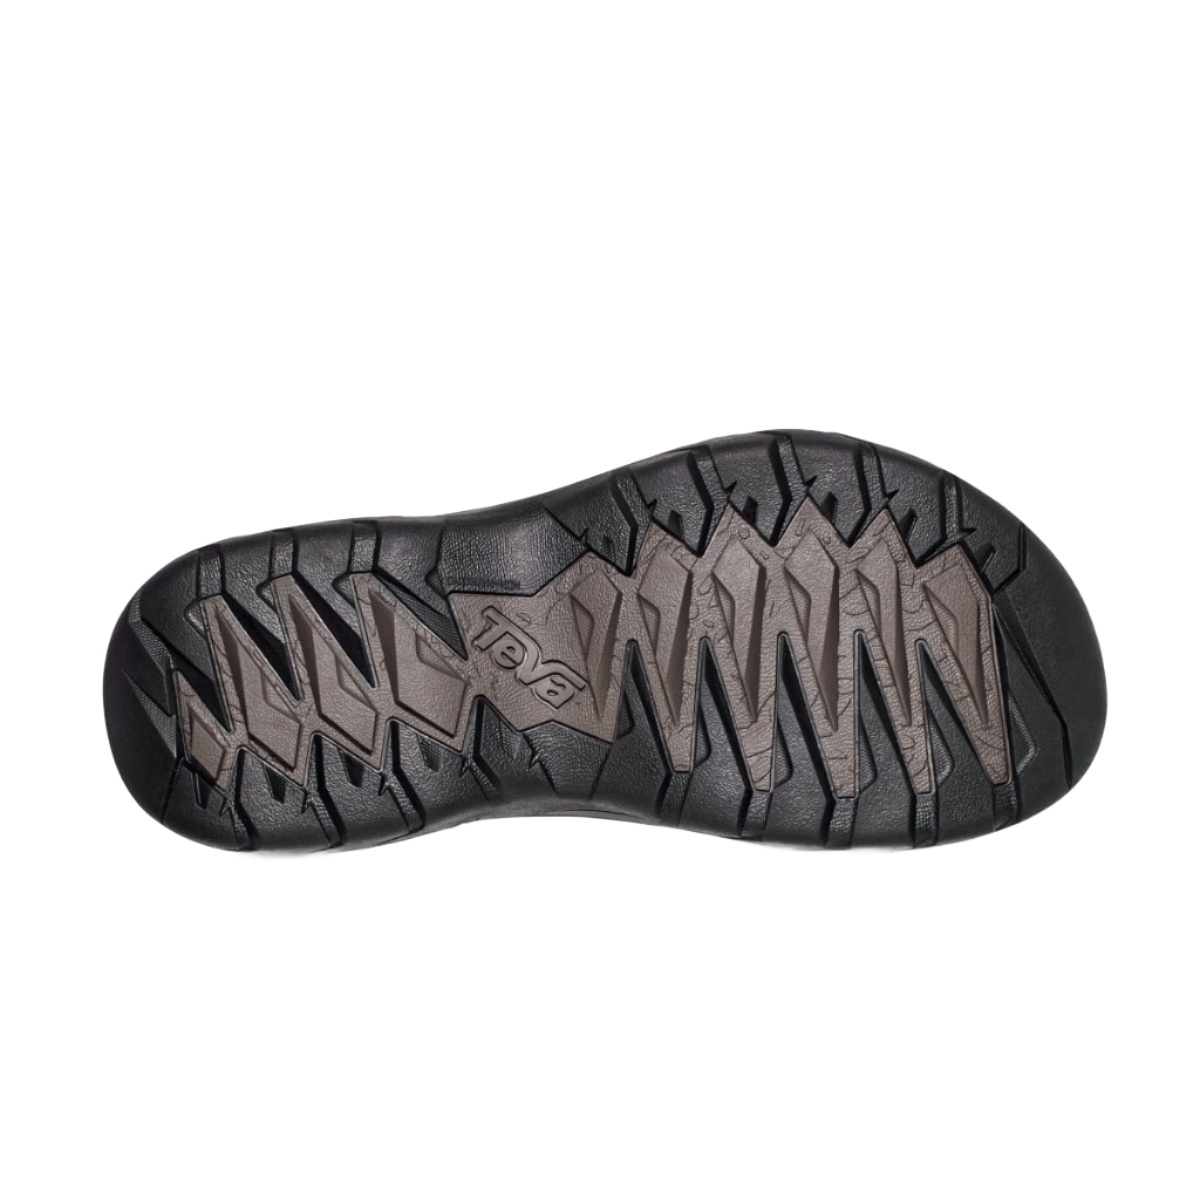 Teva Men's Terra FI5 Universal Sandal - Magma Black/Grey